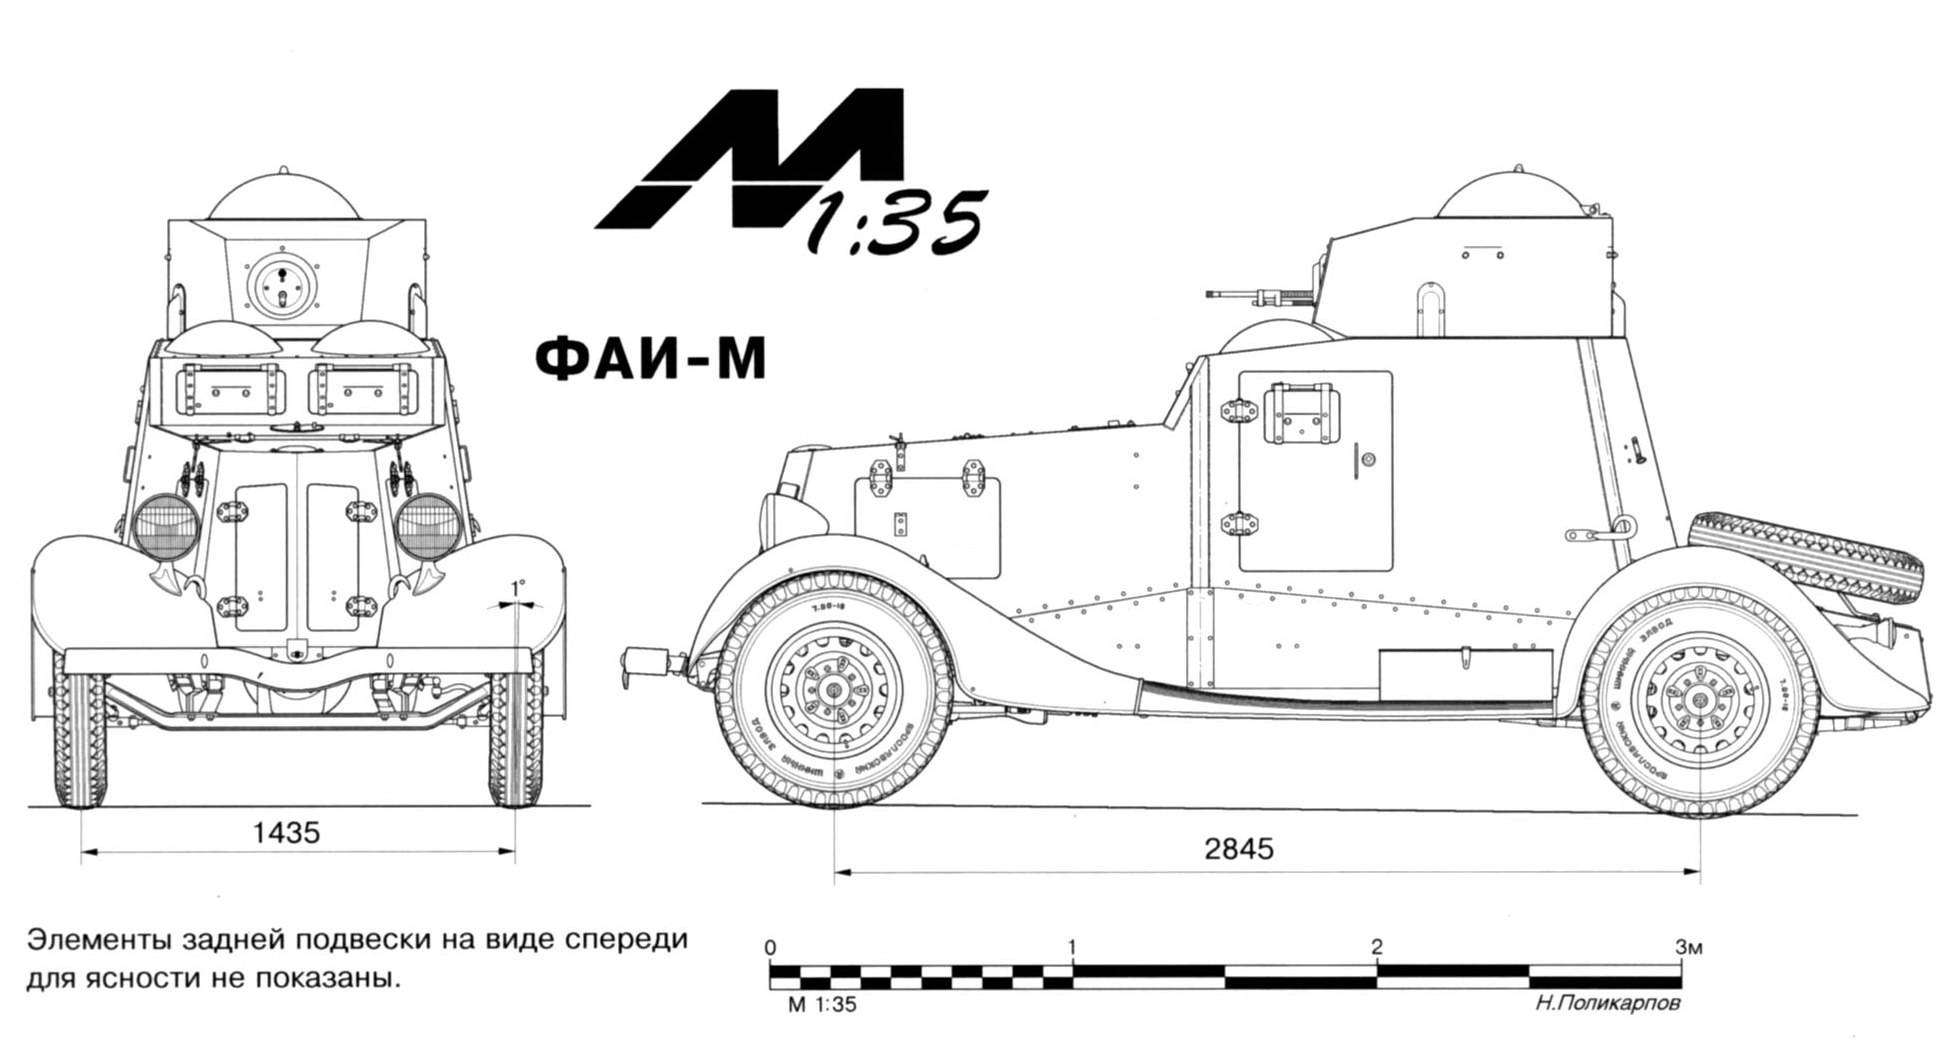 Схема ба. ФАИ-М бронеавтомобиль чертежи. Бронеавтомобиль ба-27 чертежи. Ба-20 бронеавтомобиль чертежи. Броневик ФАИ-М чертеж.